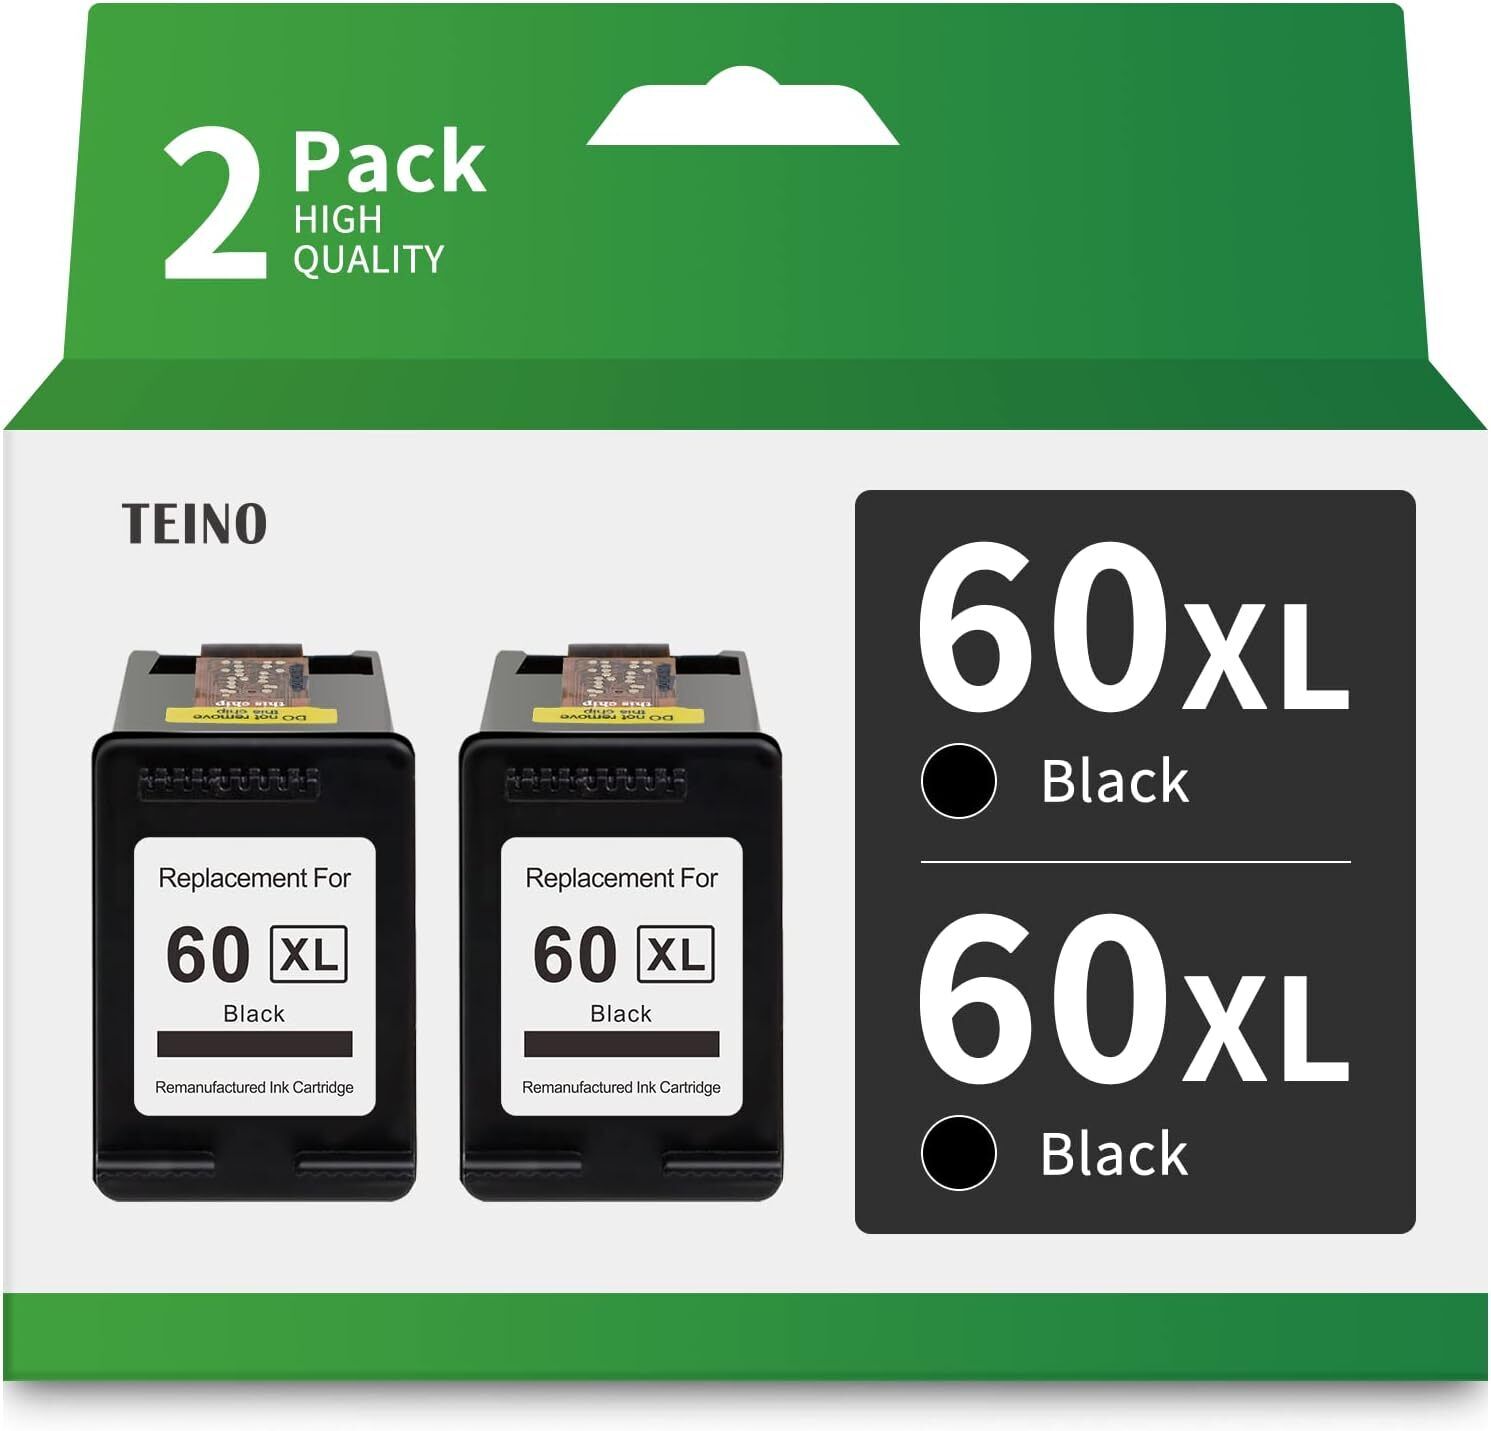 2 PACK 60XL Ink Cartridges for HP 60 XL for PhotoSmart ENVY D2545 F4272 D2660 